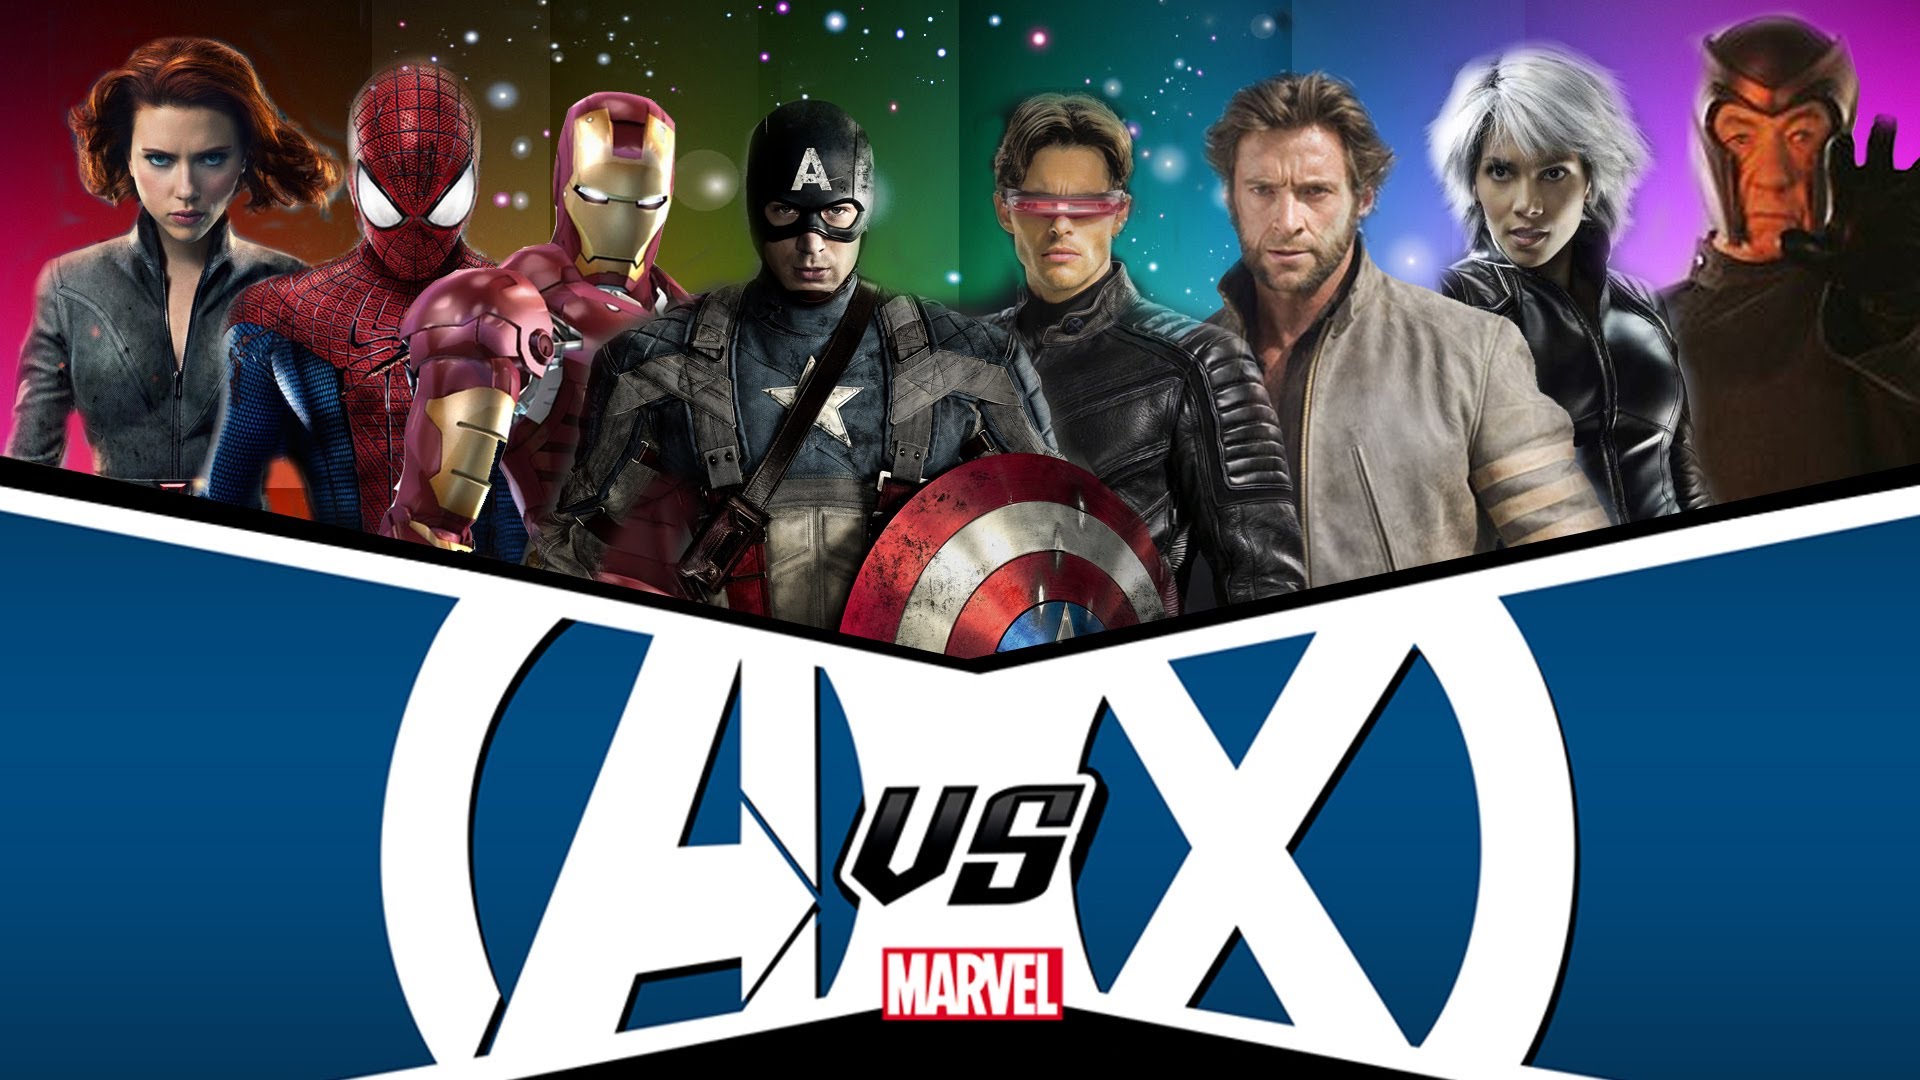 WATCH: Avengers Meet X-Men In Awesome Fanmade Trailer